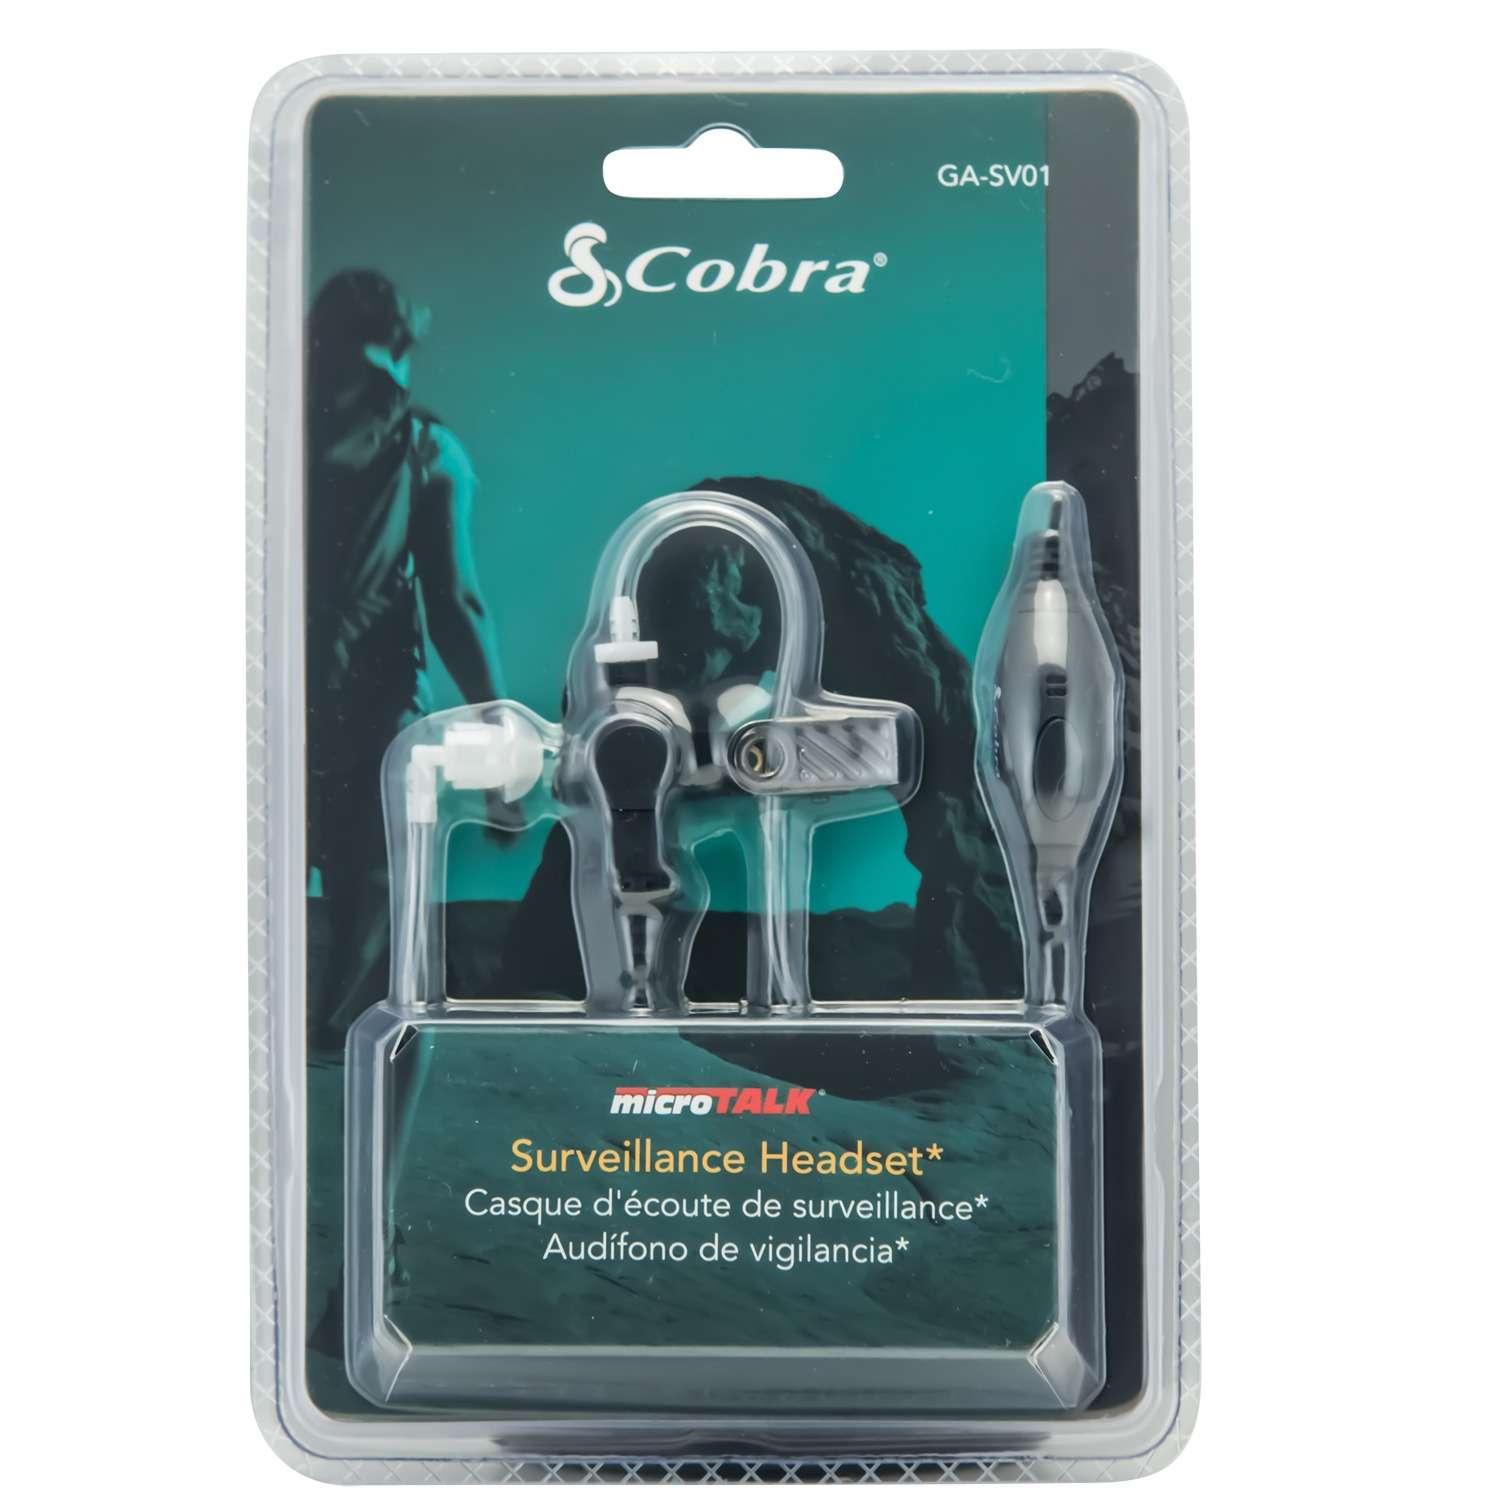 Cobra Surveillance Headset